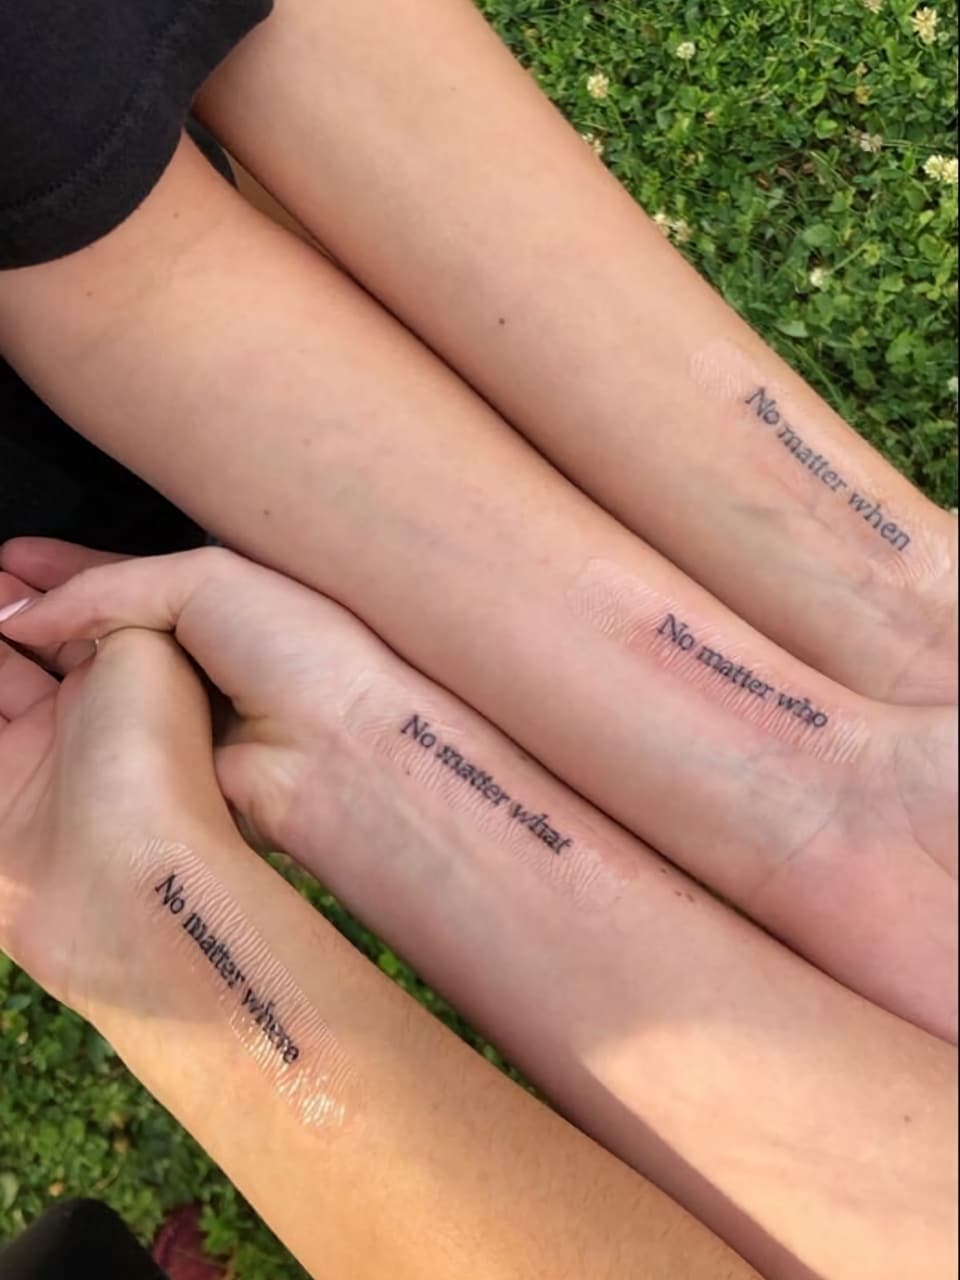 Frases para tatuarse - No matter where